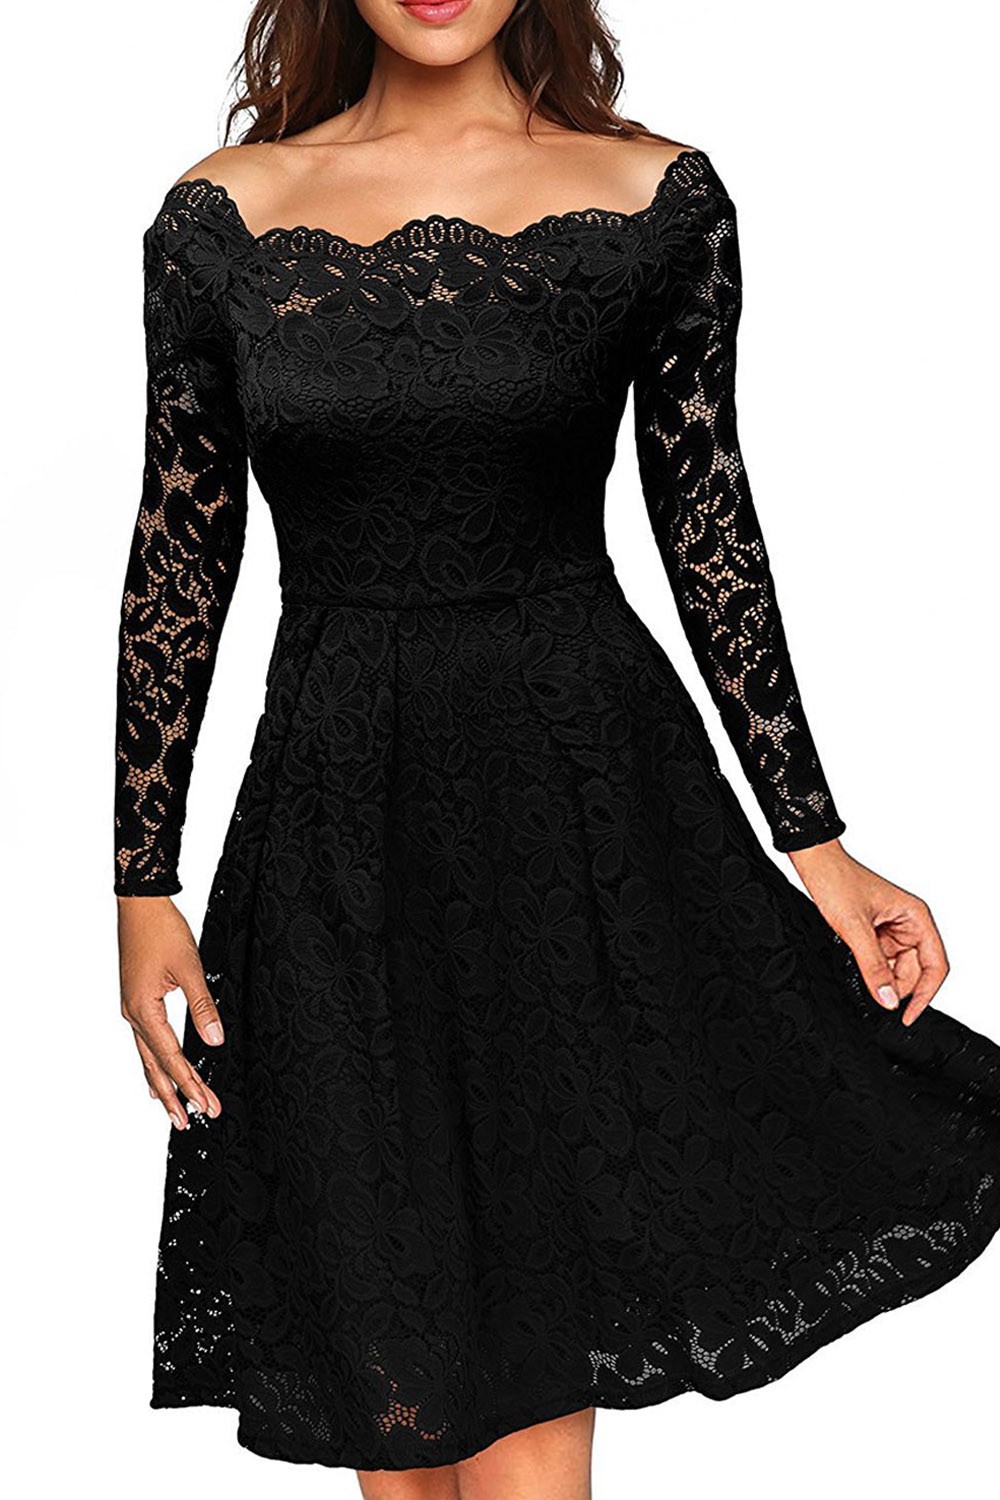 Long black lace dress in size L